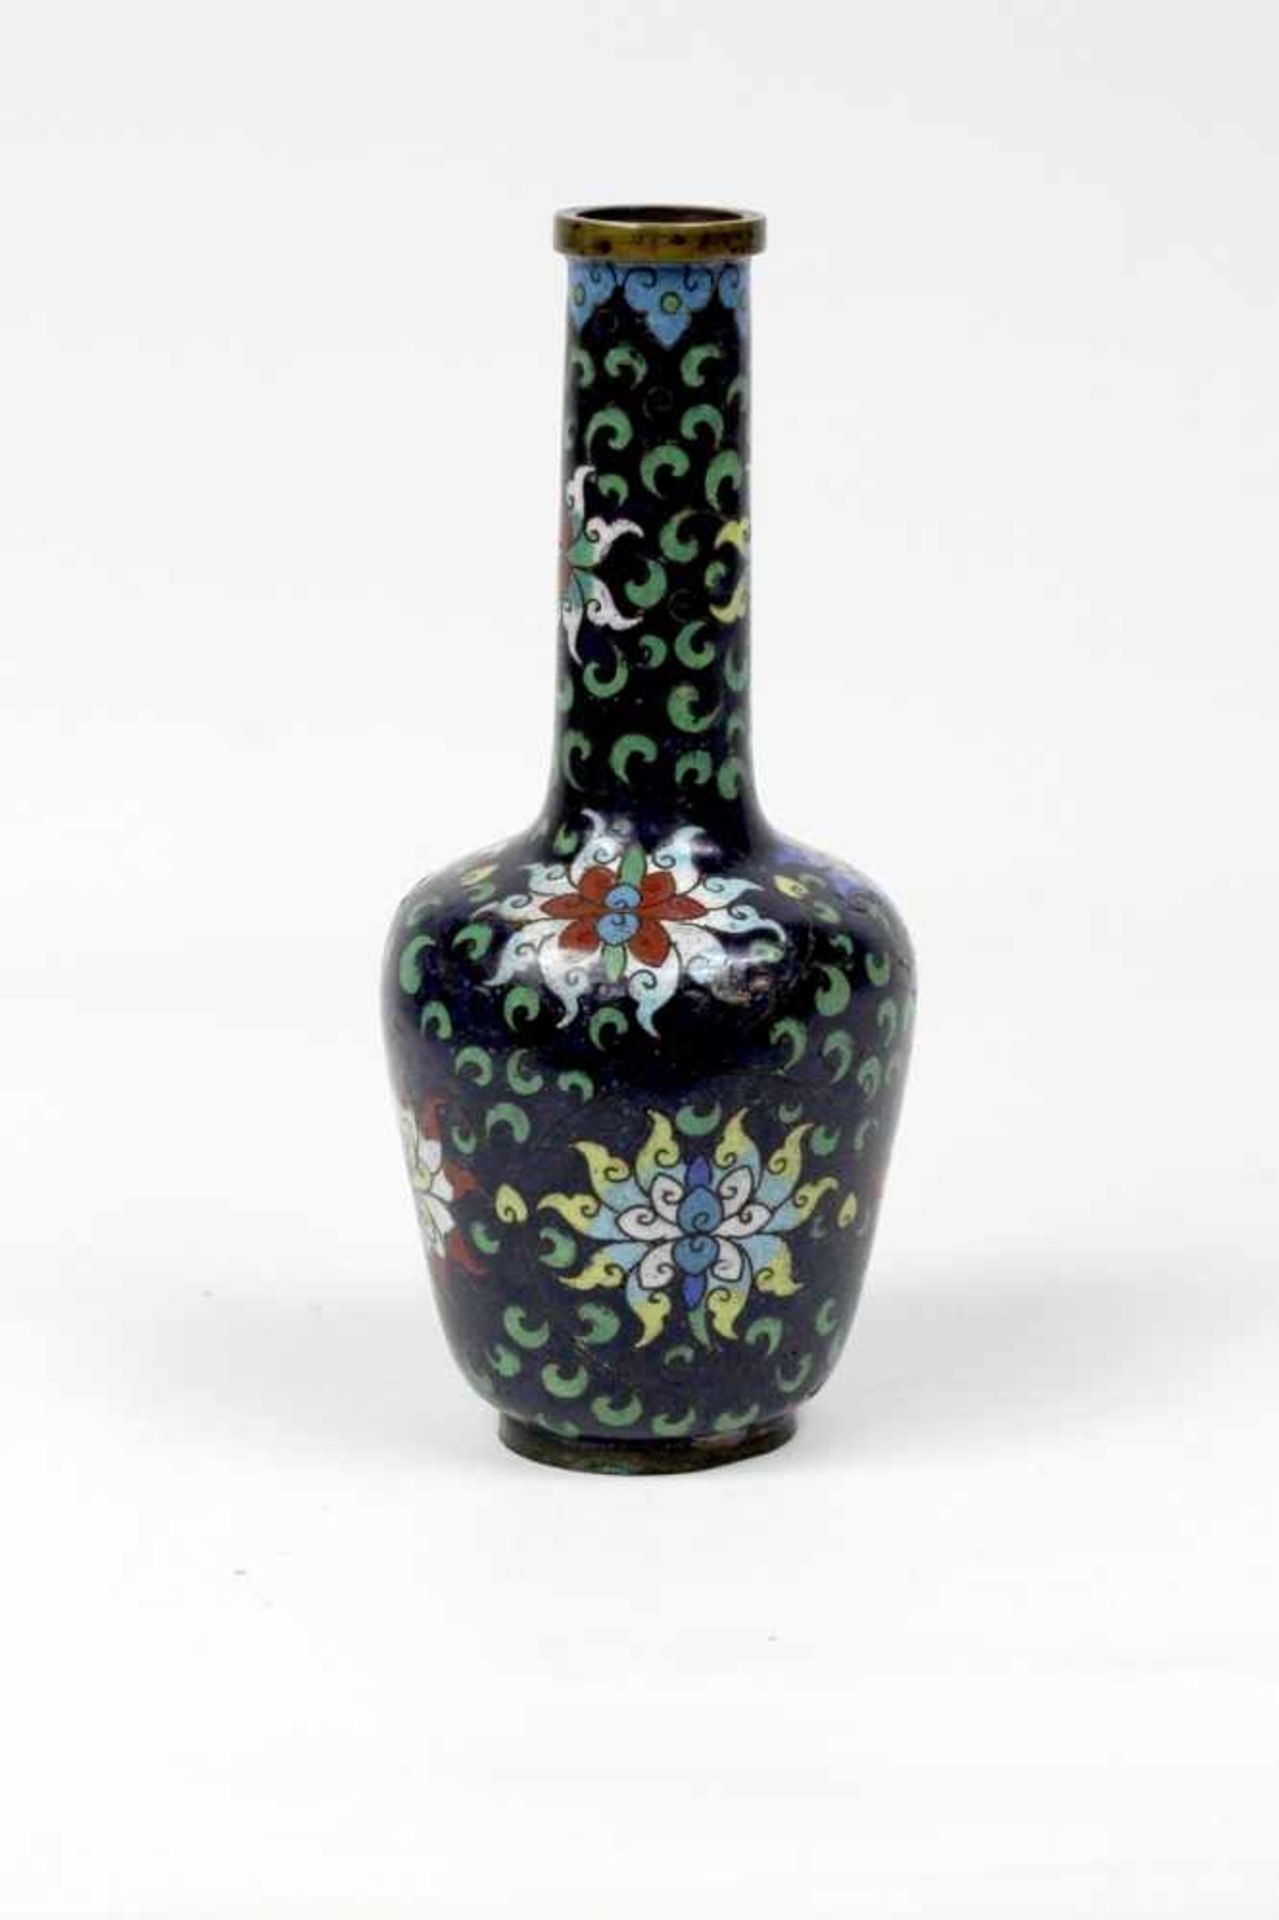 China Blaue Cloisonne-Chrysanthemen Vase frühe Qing Dynastie 17.Jhdt.< - Bild 2 aus 5